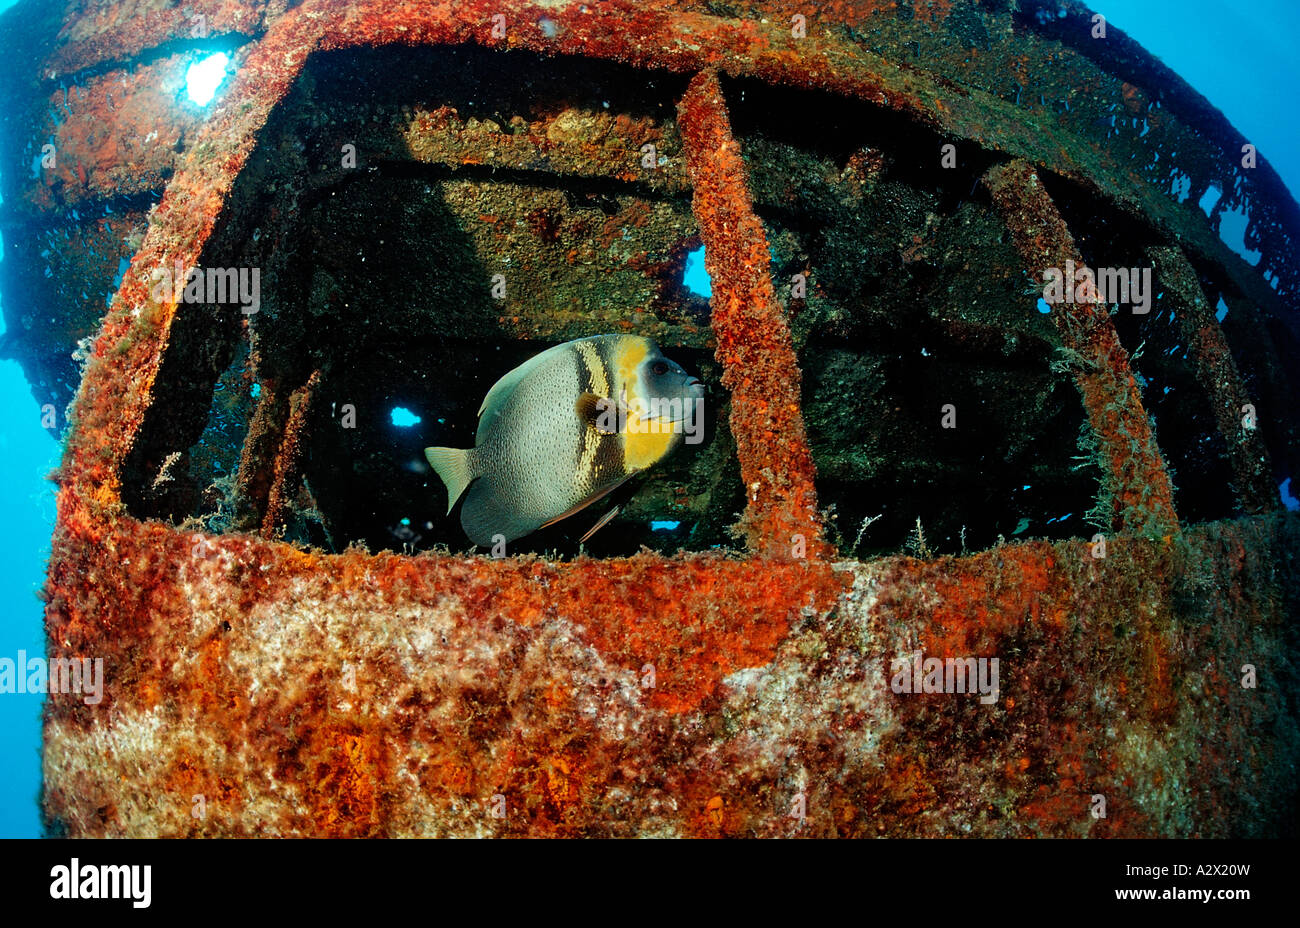 Cortez angelfish in ship wreck Pomacanthus zonipectus Mexico Sea of Cortez Baja California La Paz Stock Photo